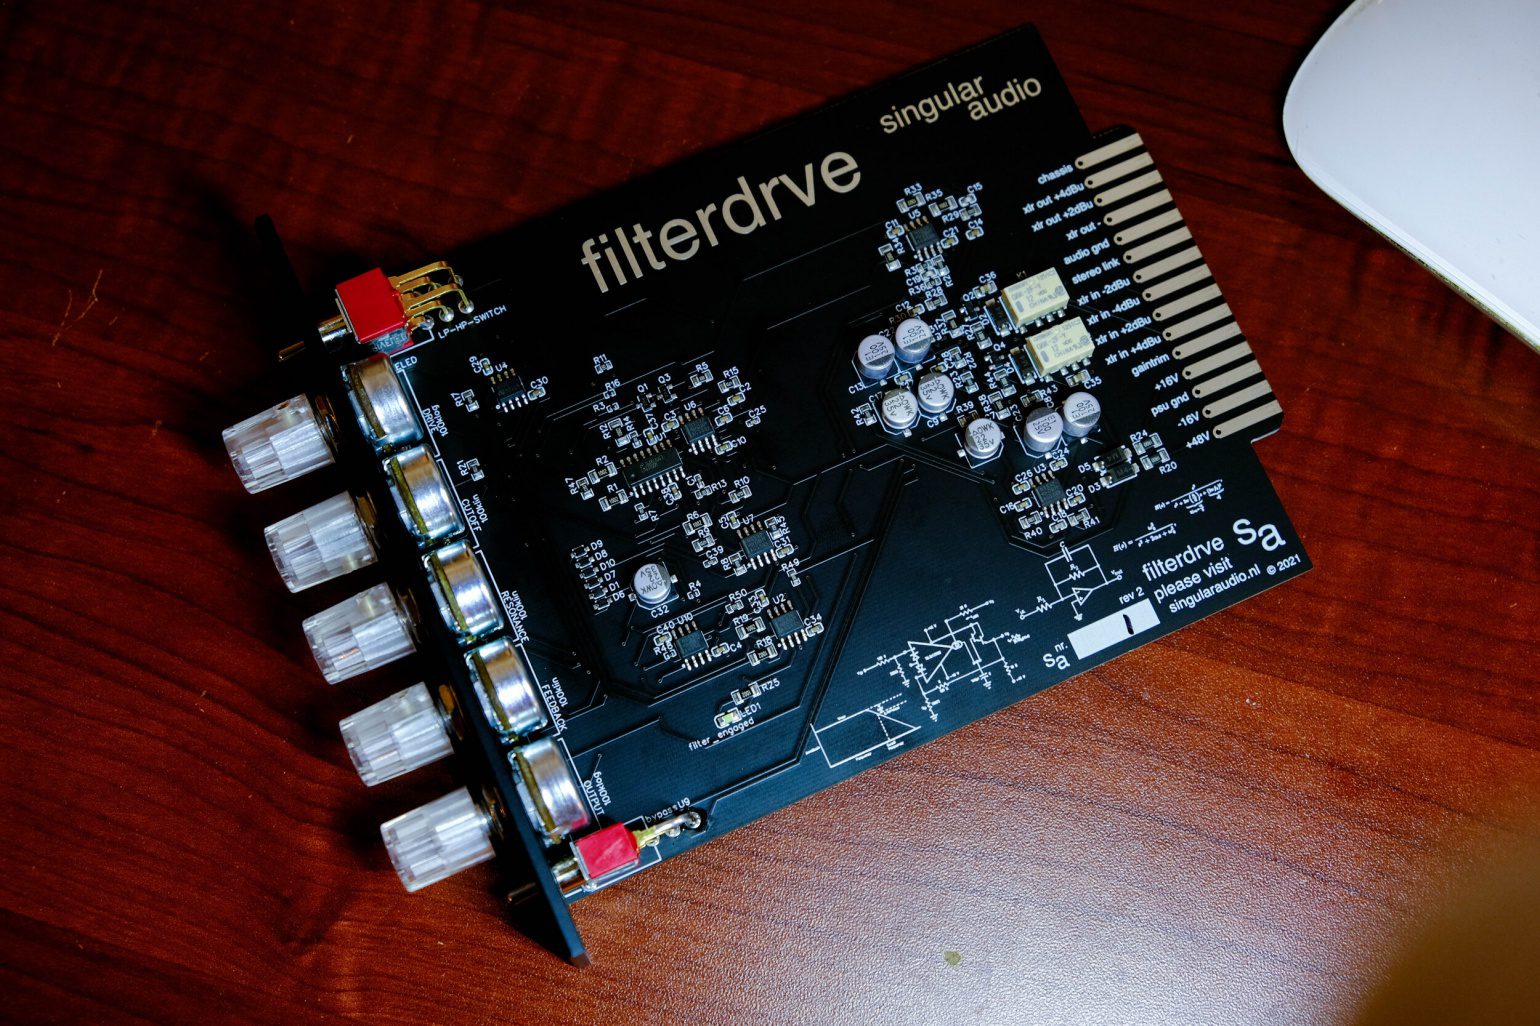 Singular Audio filterdrve board